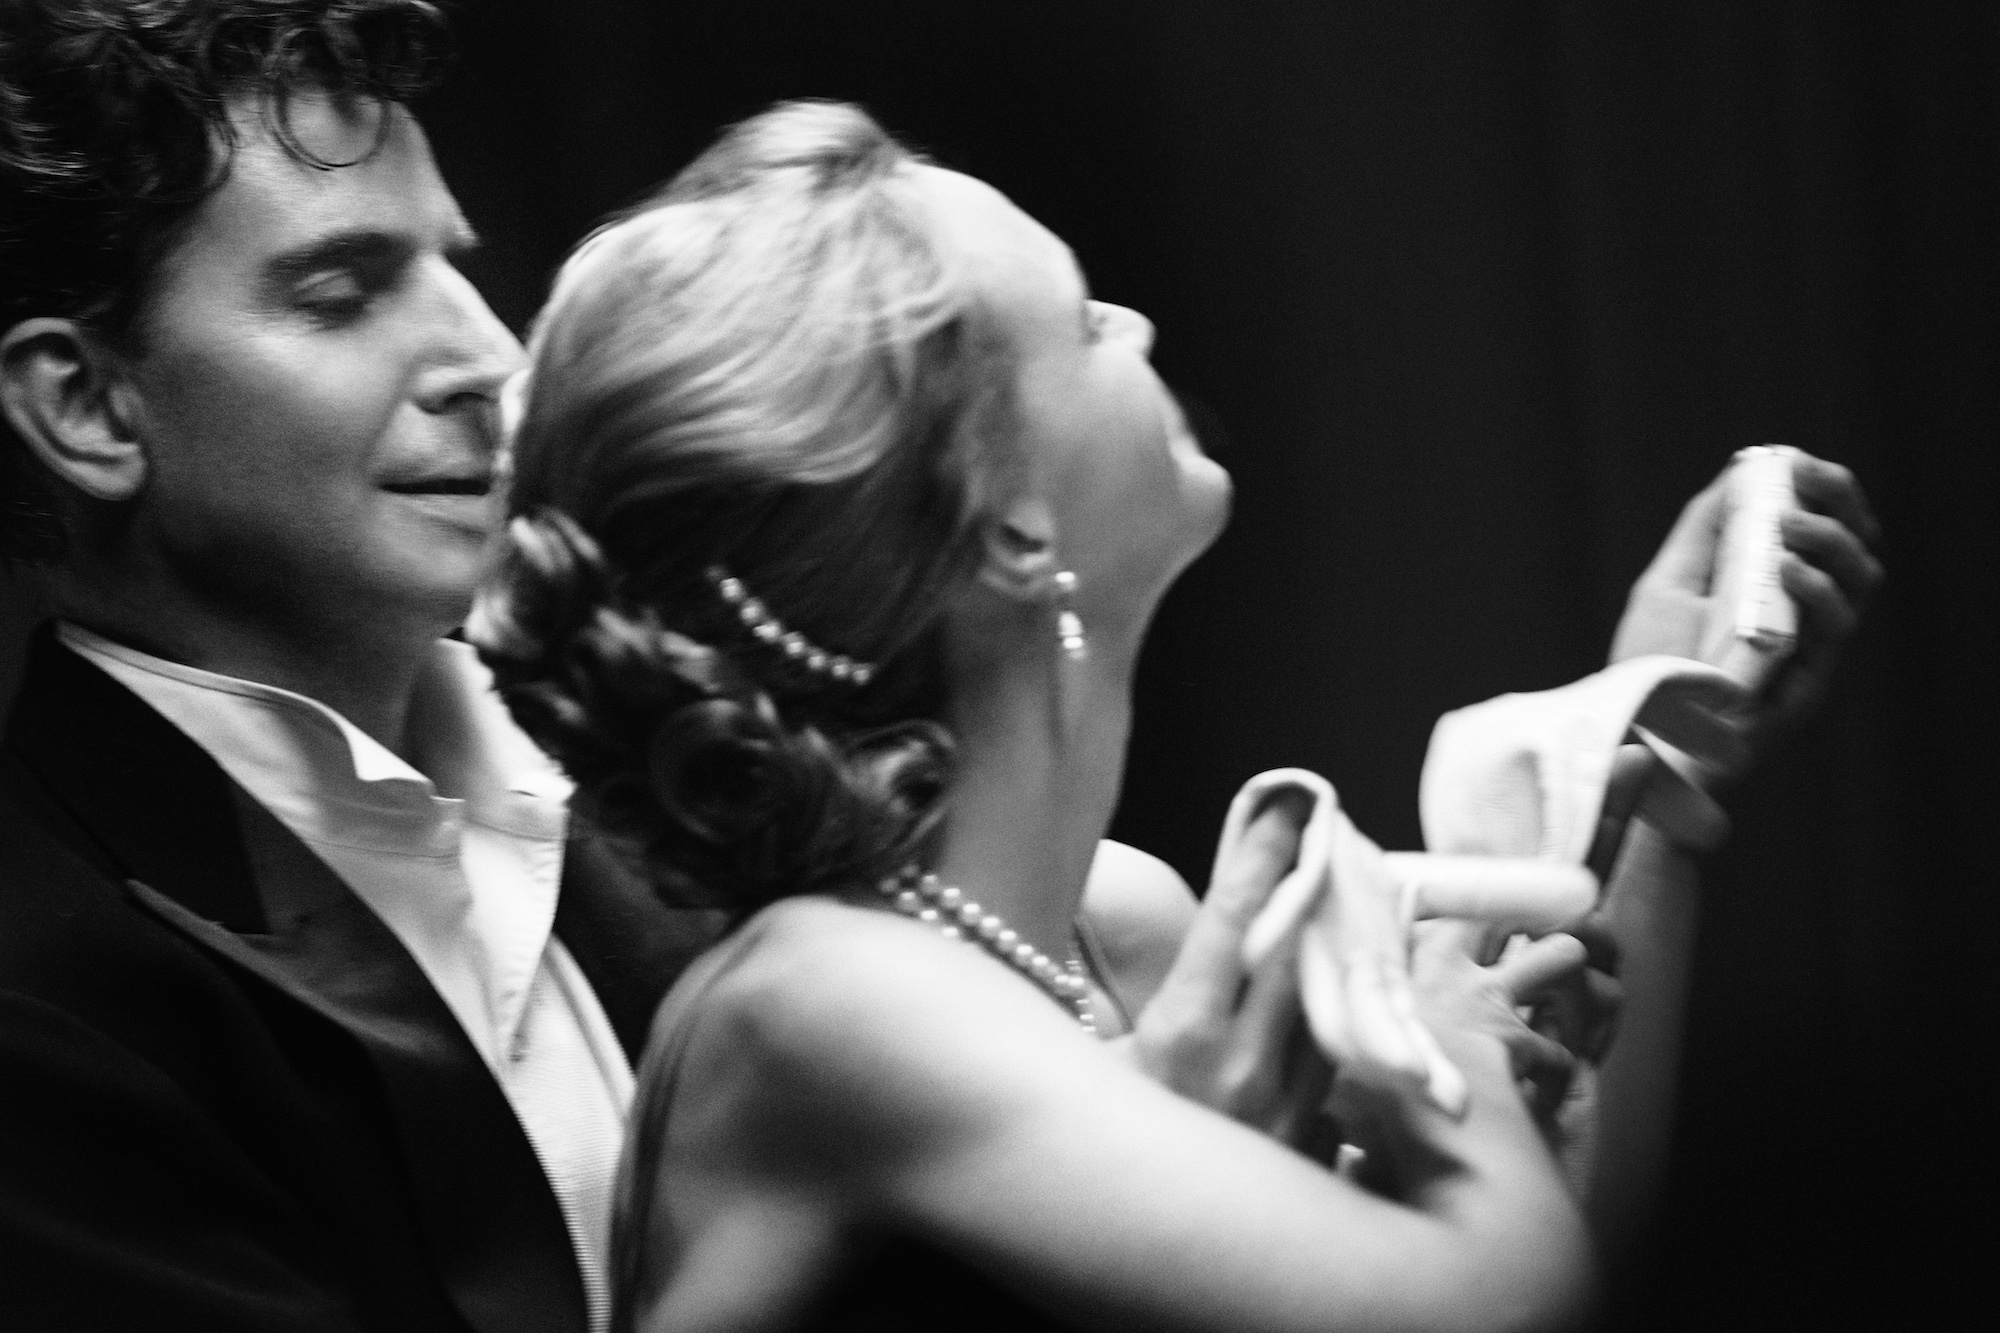 Critics upset by Bradley Cooper's elongated nose as Leonard Bernstein in  'Maestro